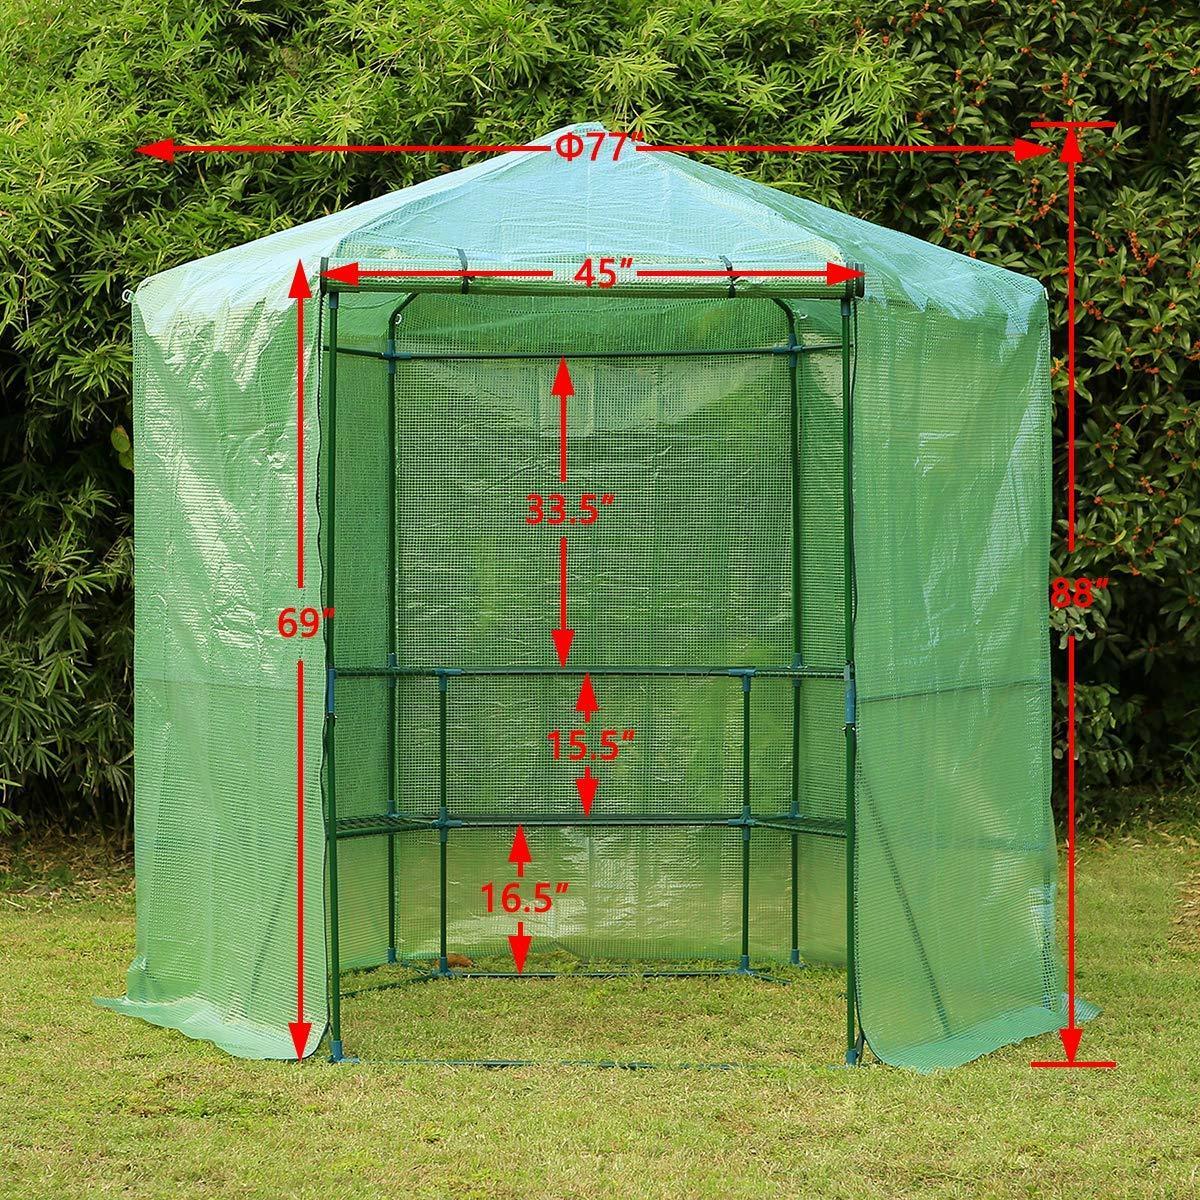 6.4&#039;x6.4&#039;x7.3&#039; Portable Hexagonal Greenhouse Kit with 3-Tier Shelf, Green